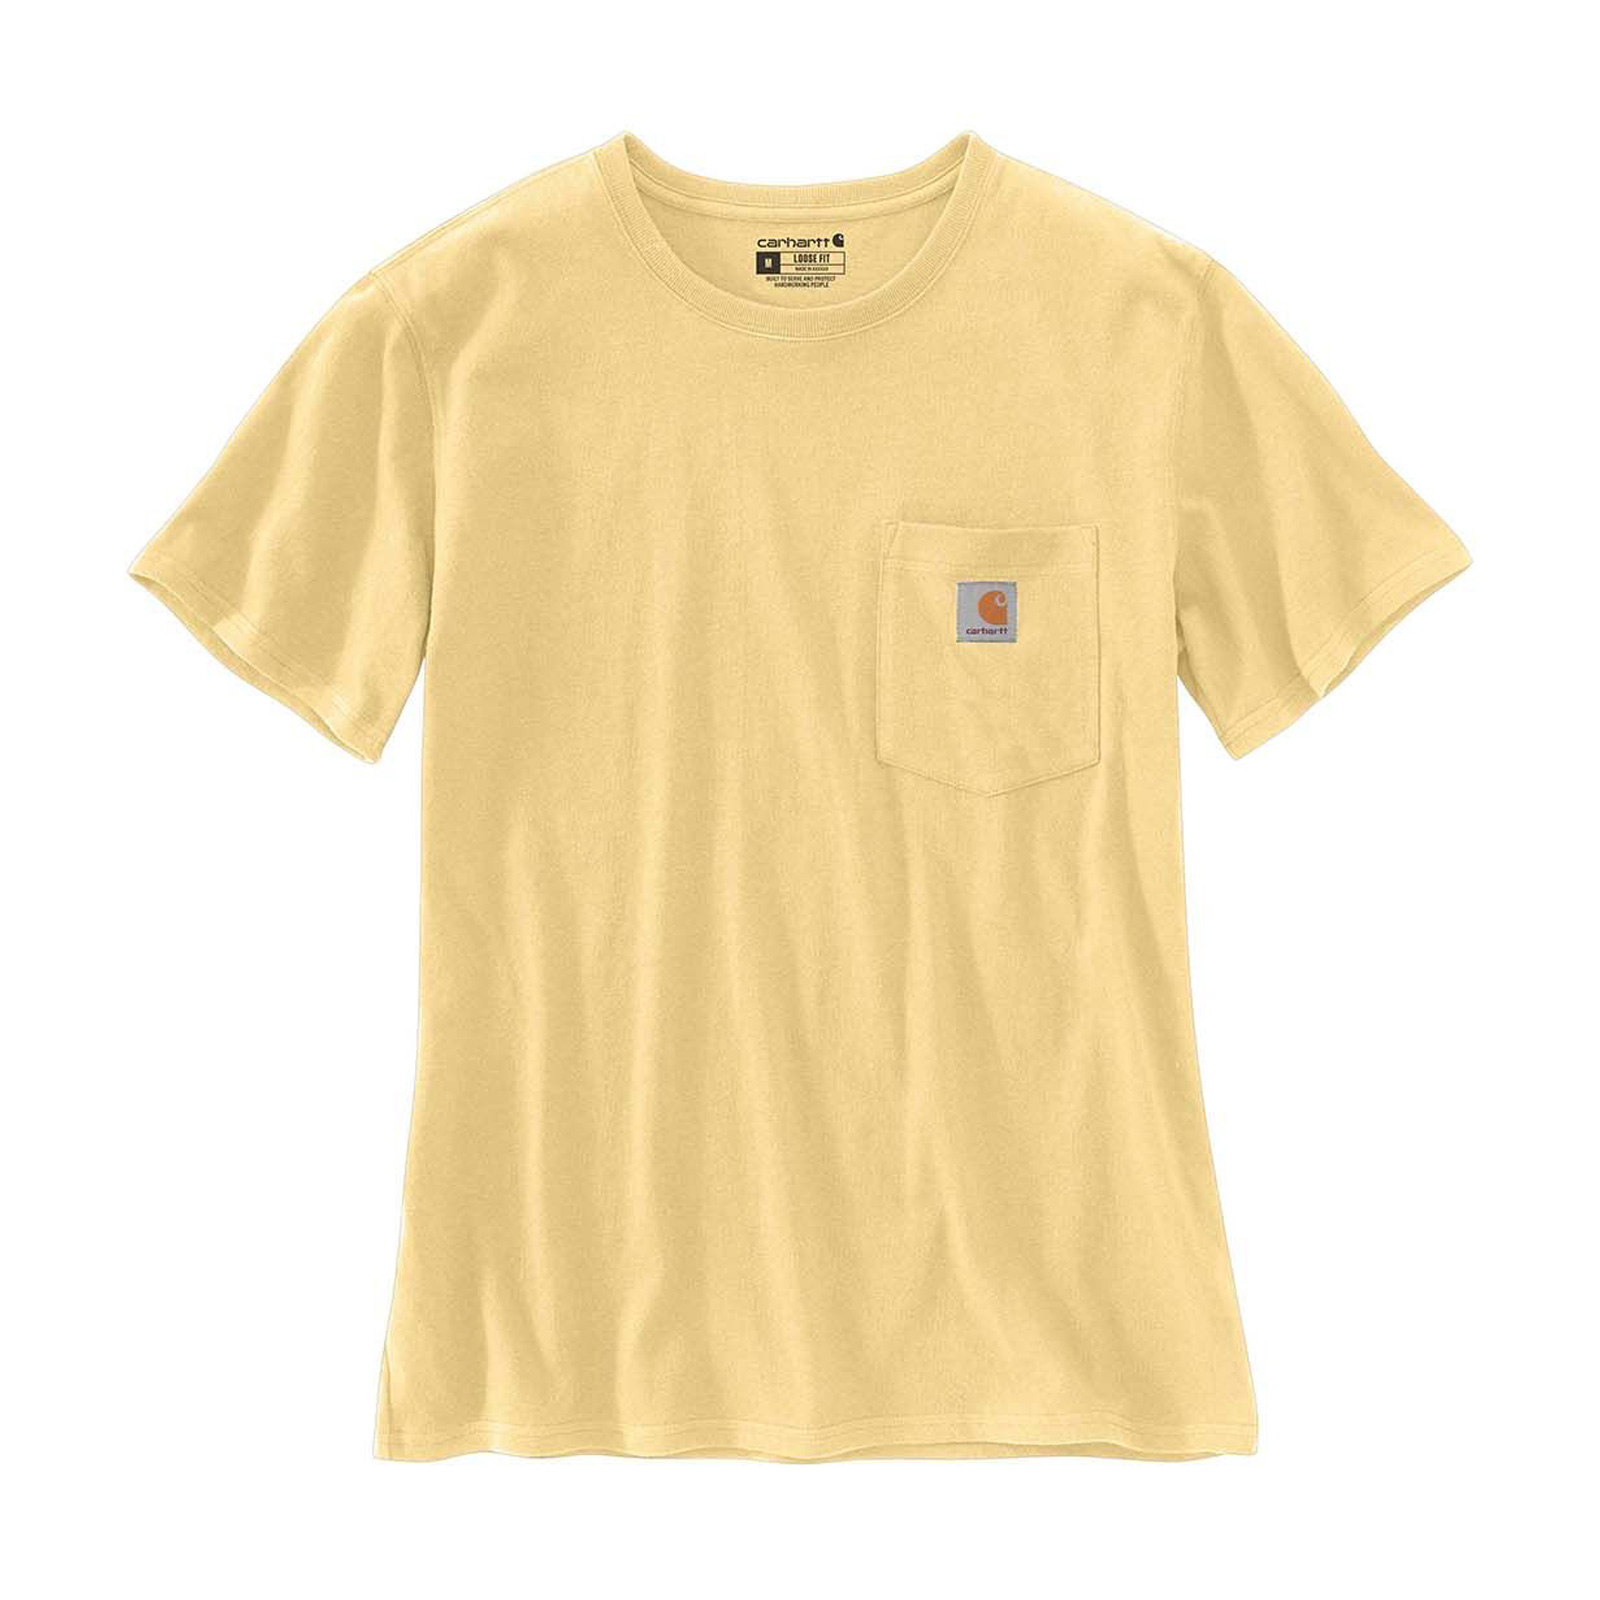 Carhartt Pocket Damen T-Shirt S/S Blassgelb XS